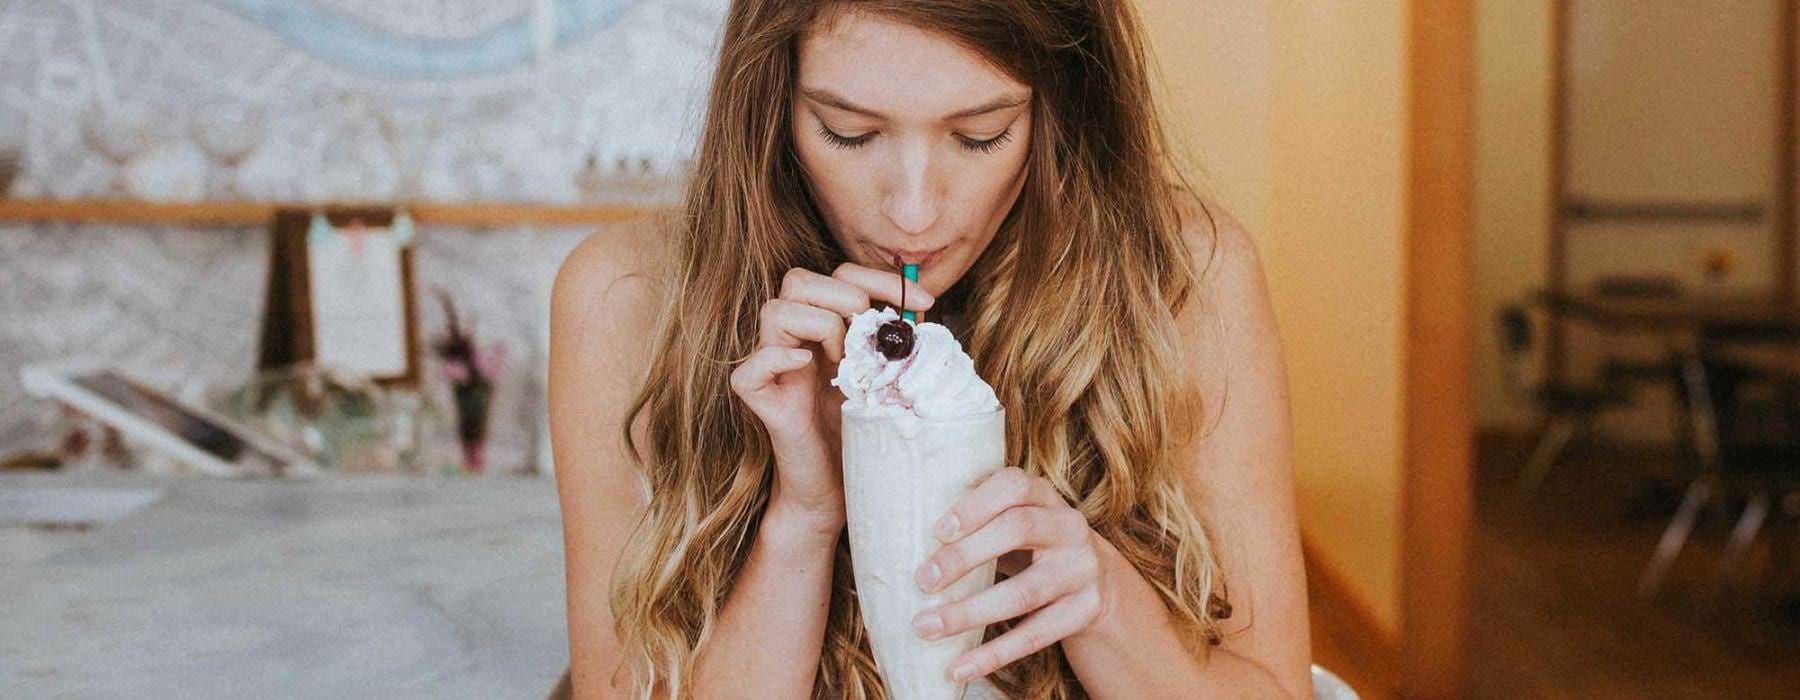 a woman drinking a milkshake